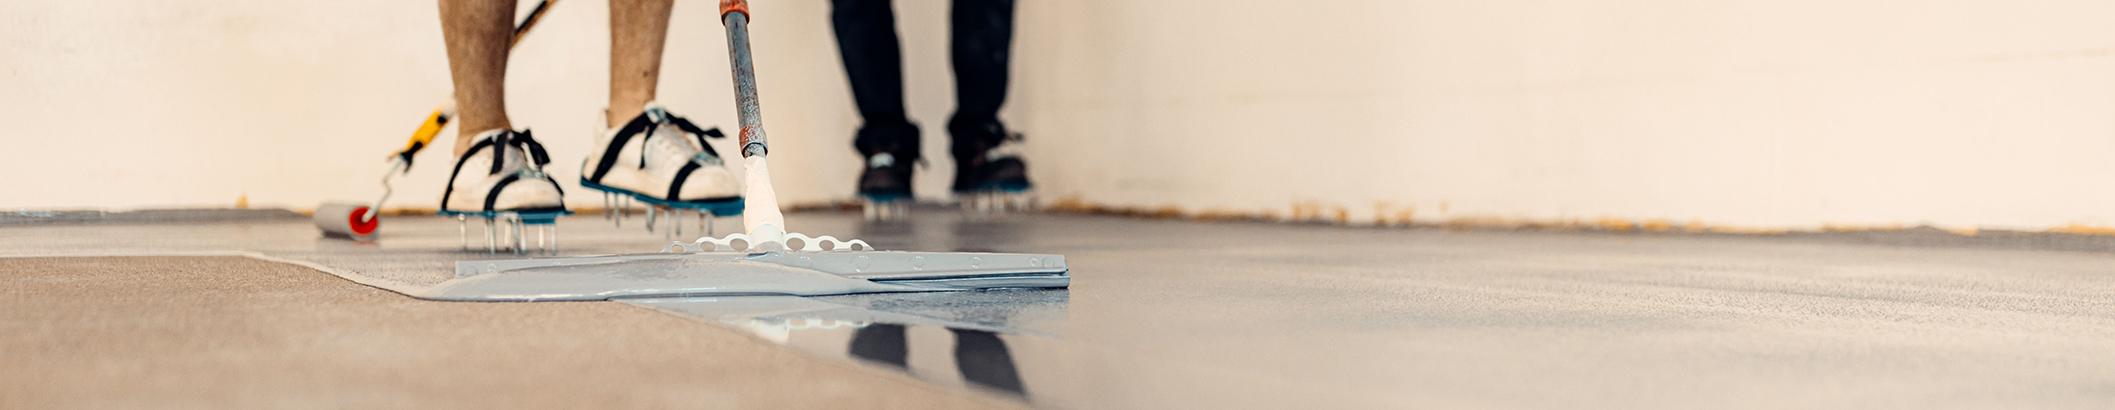 basement floor coating application